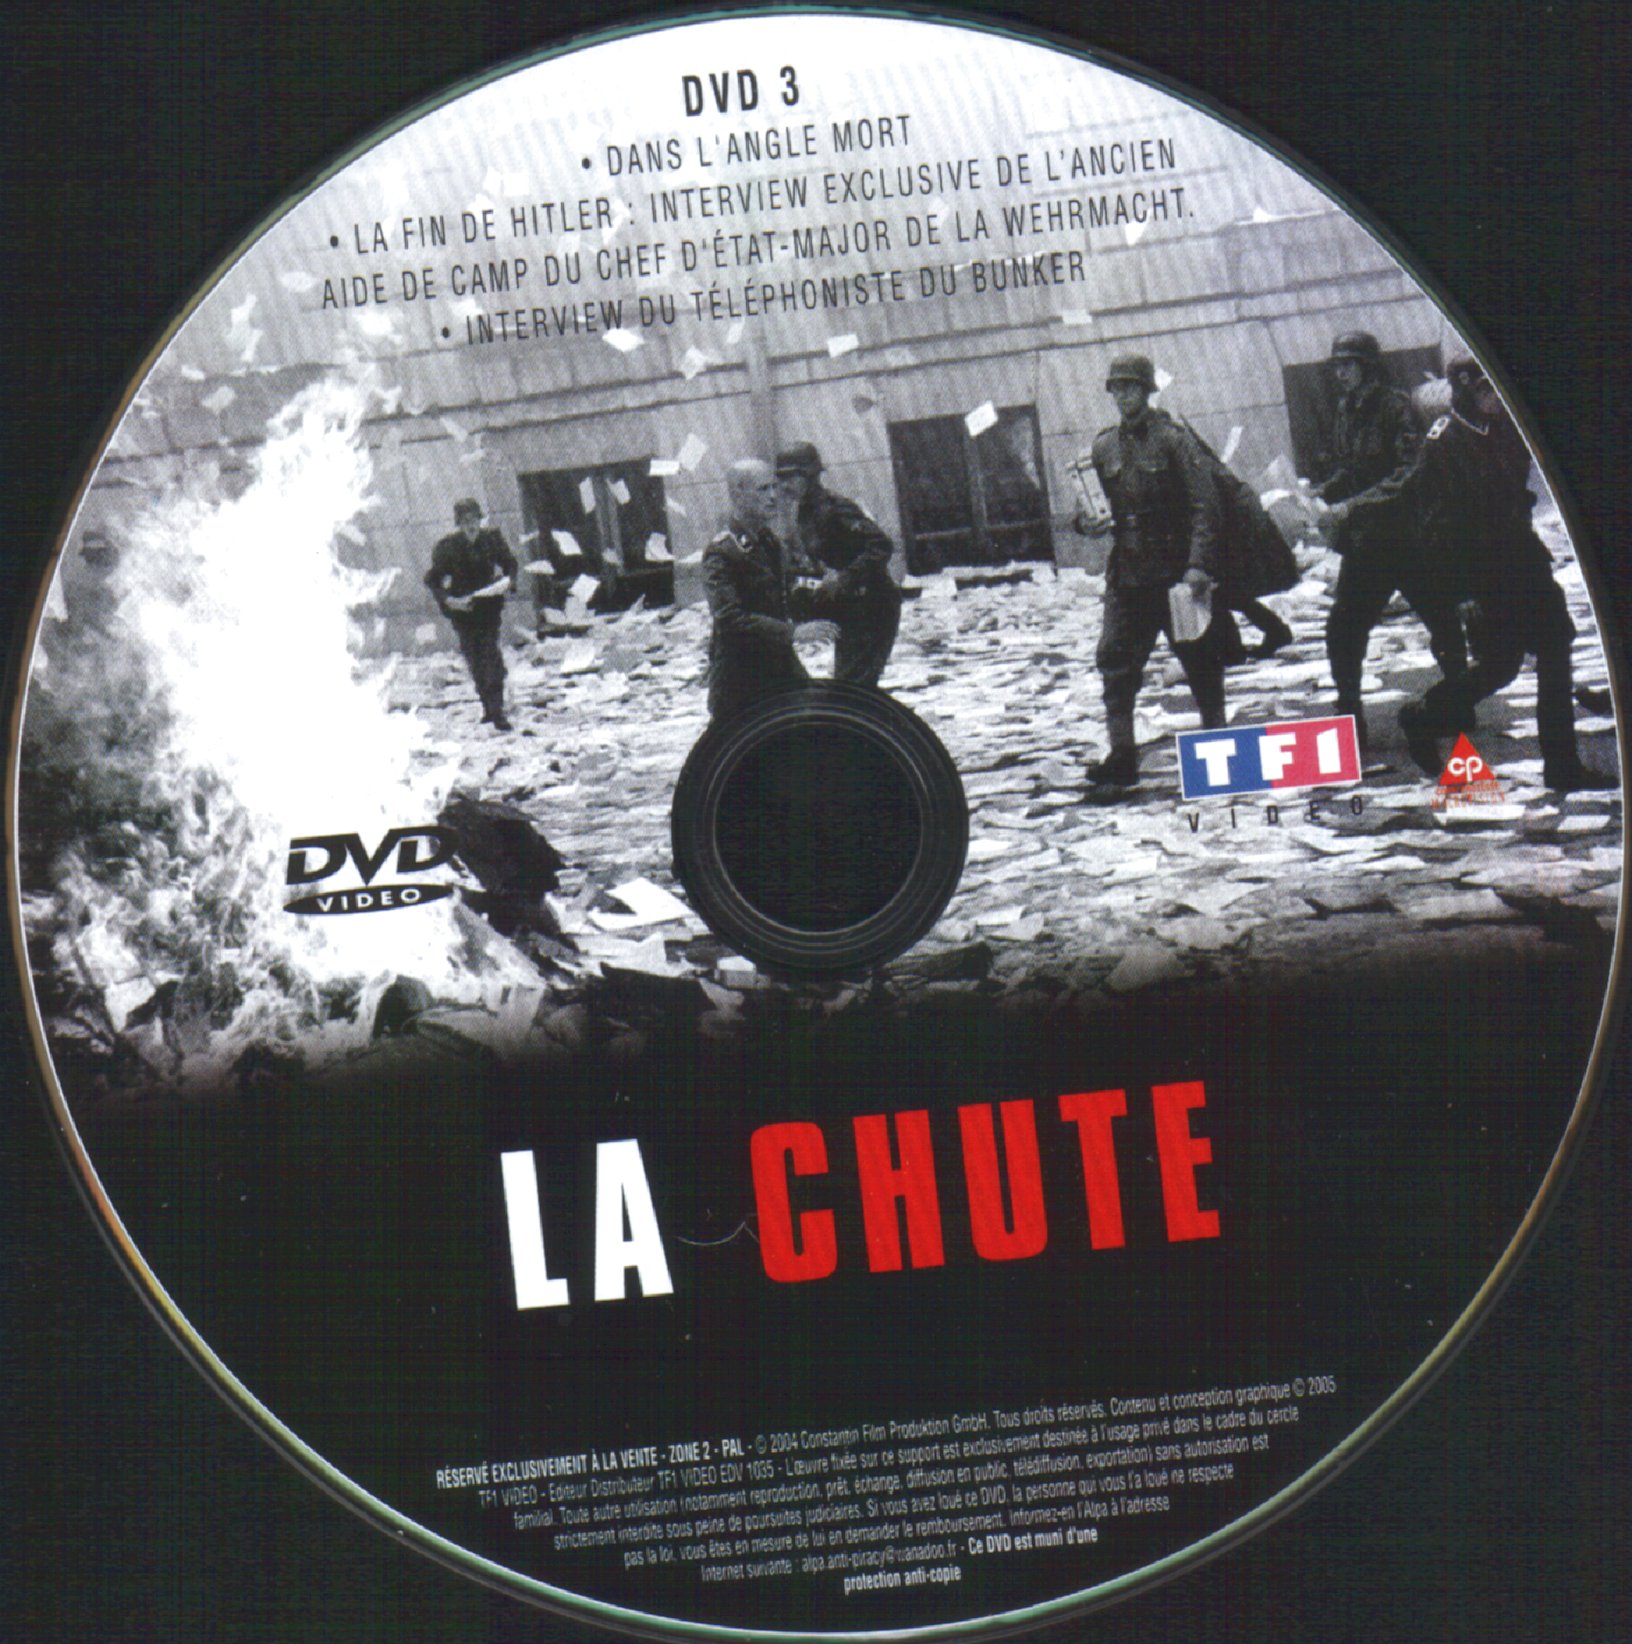 La chute (DVD 3)